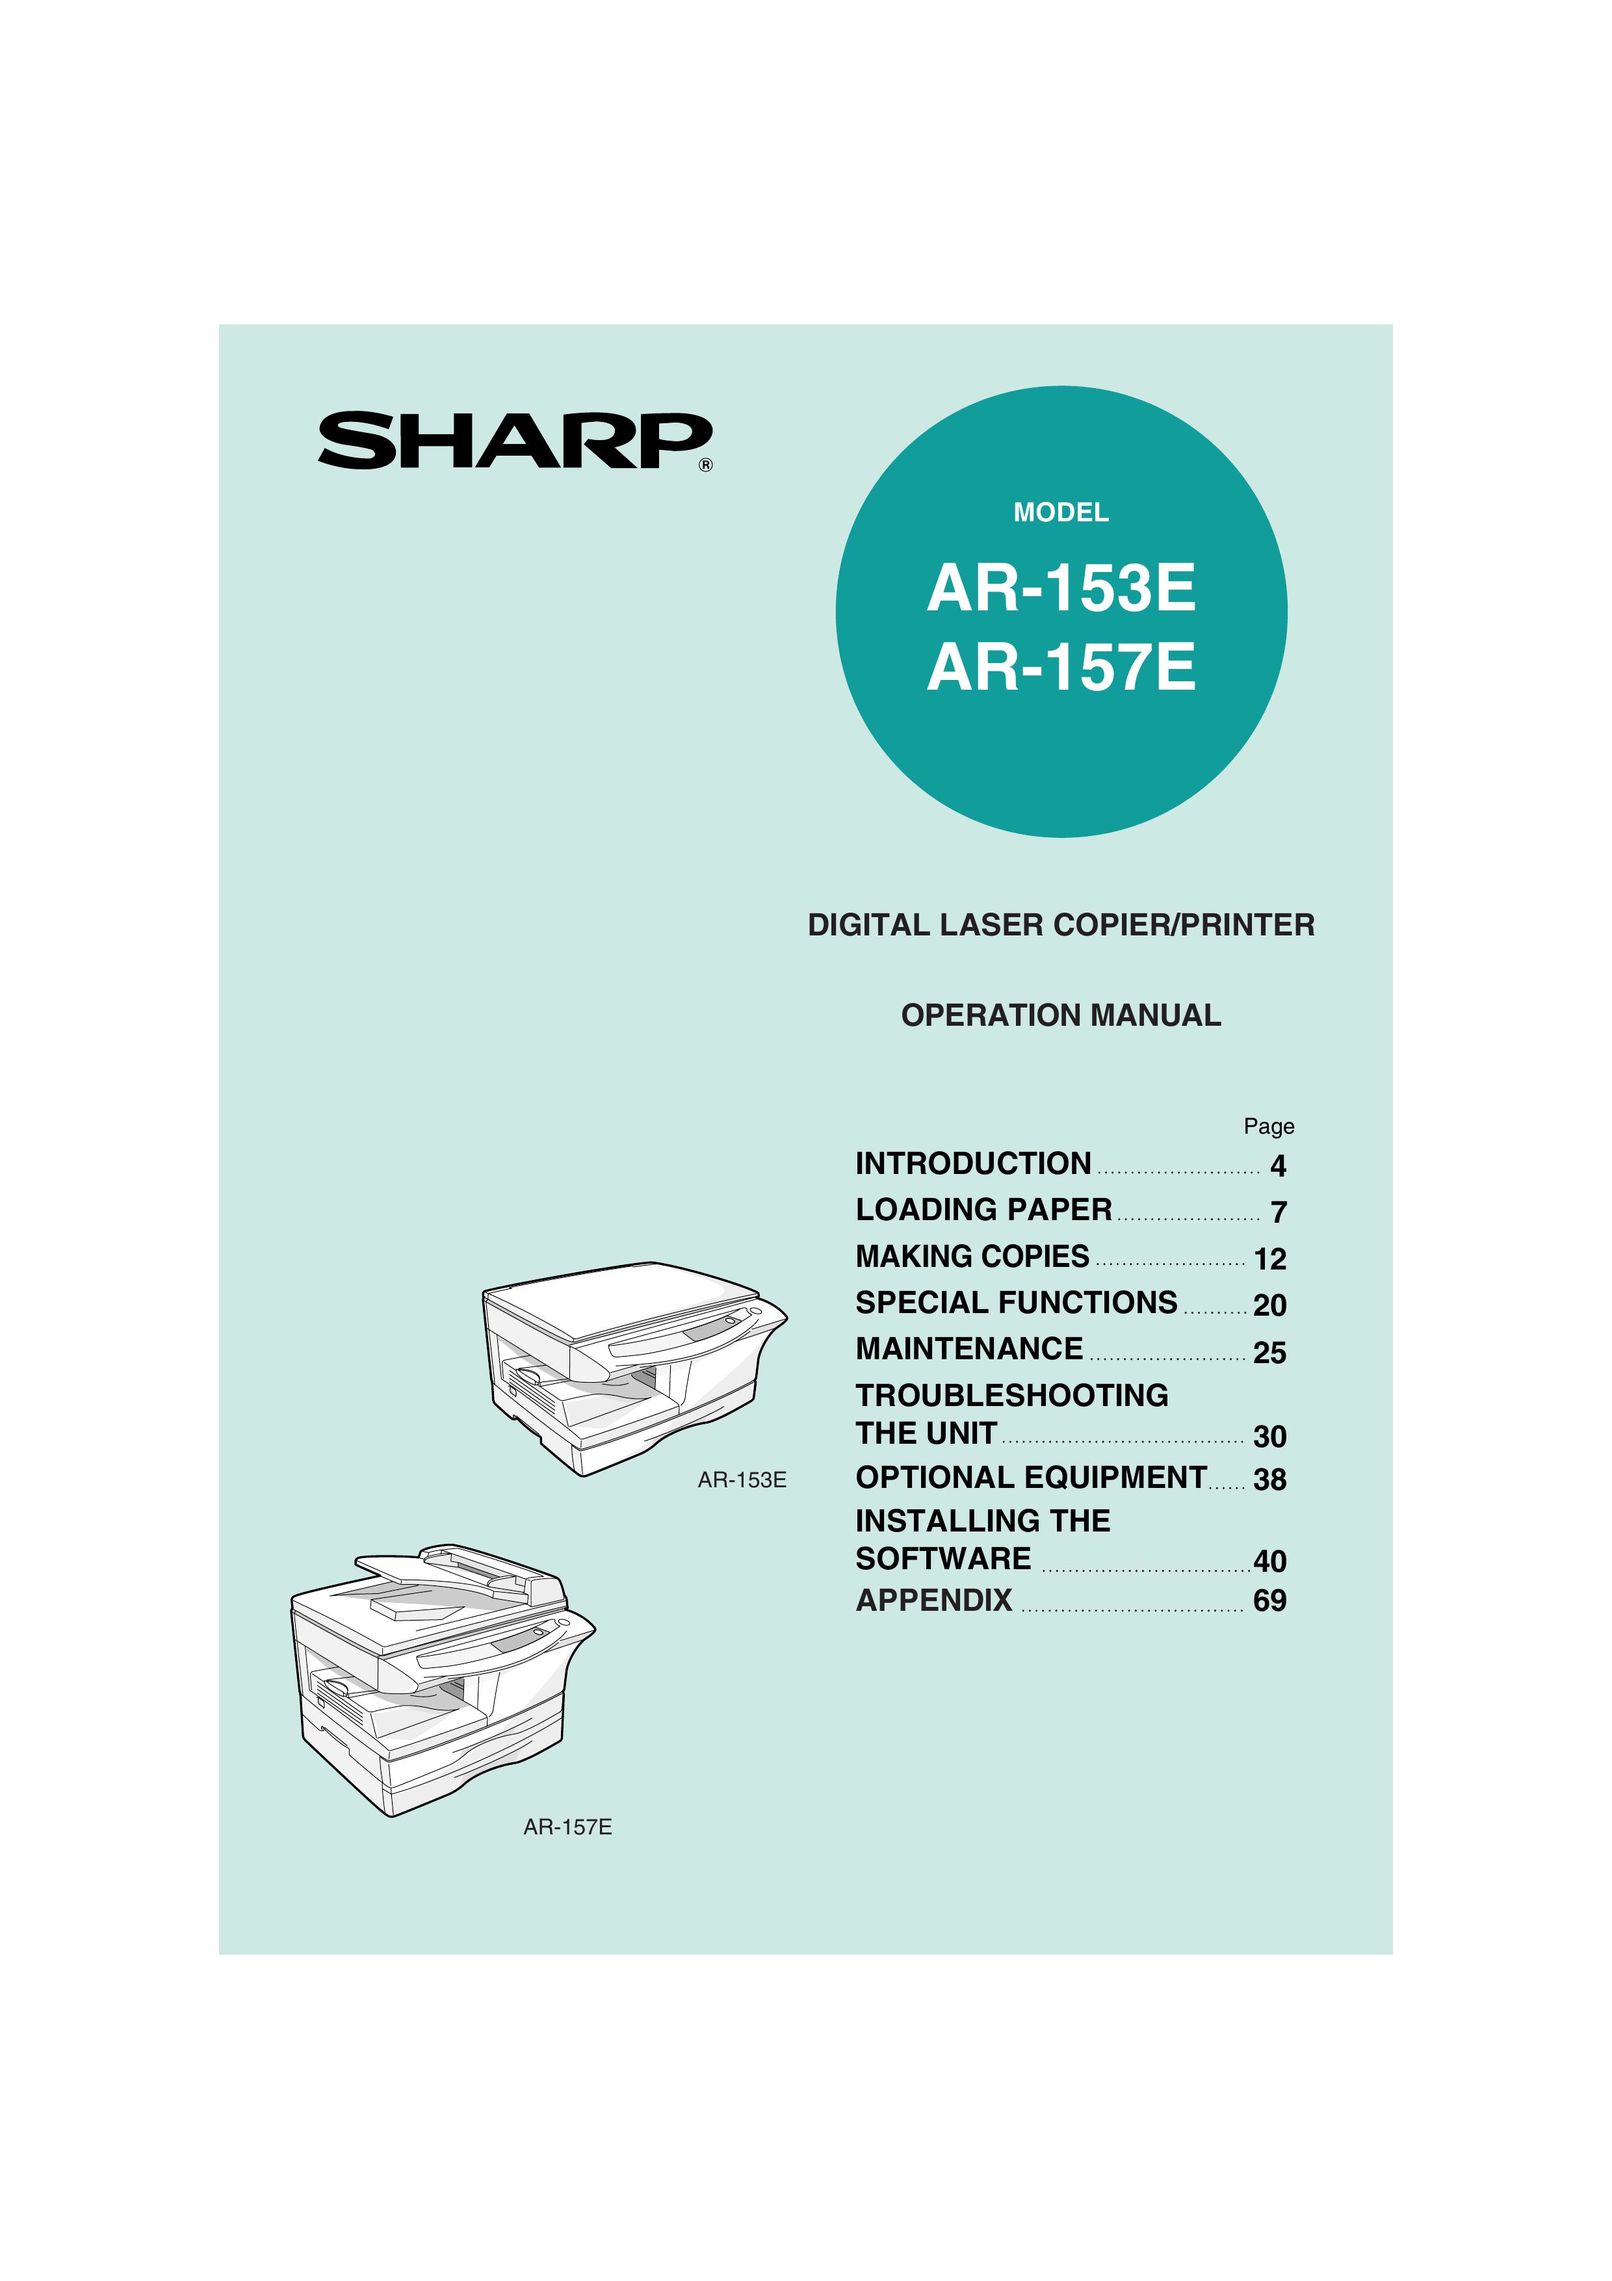 Sharp AR-153E All in One Printer User Manual